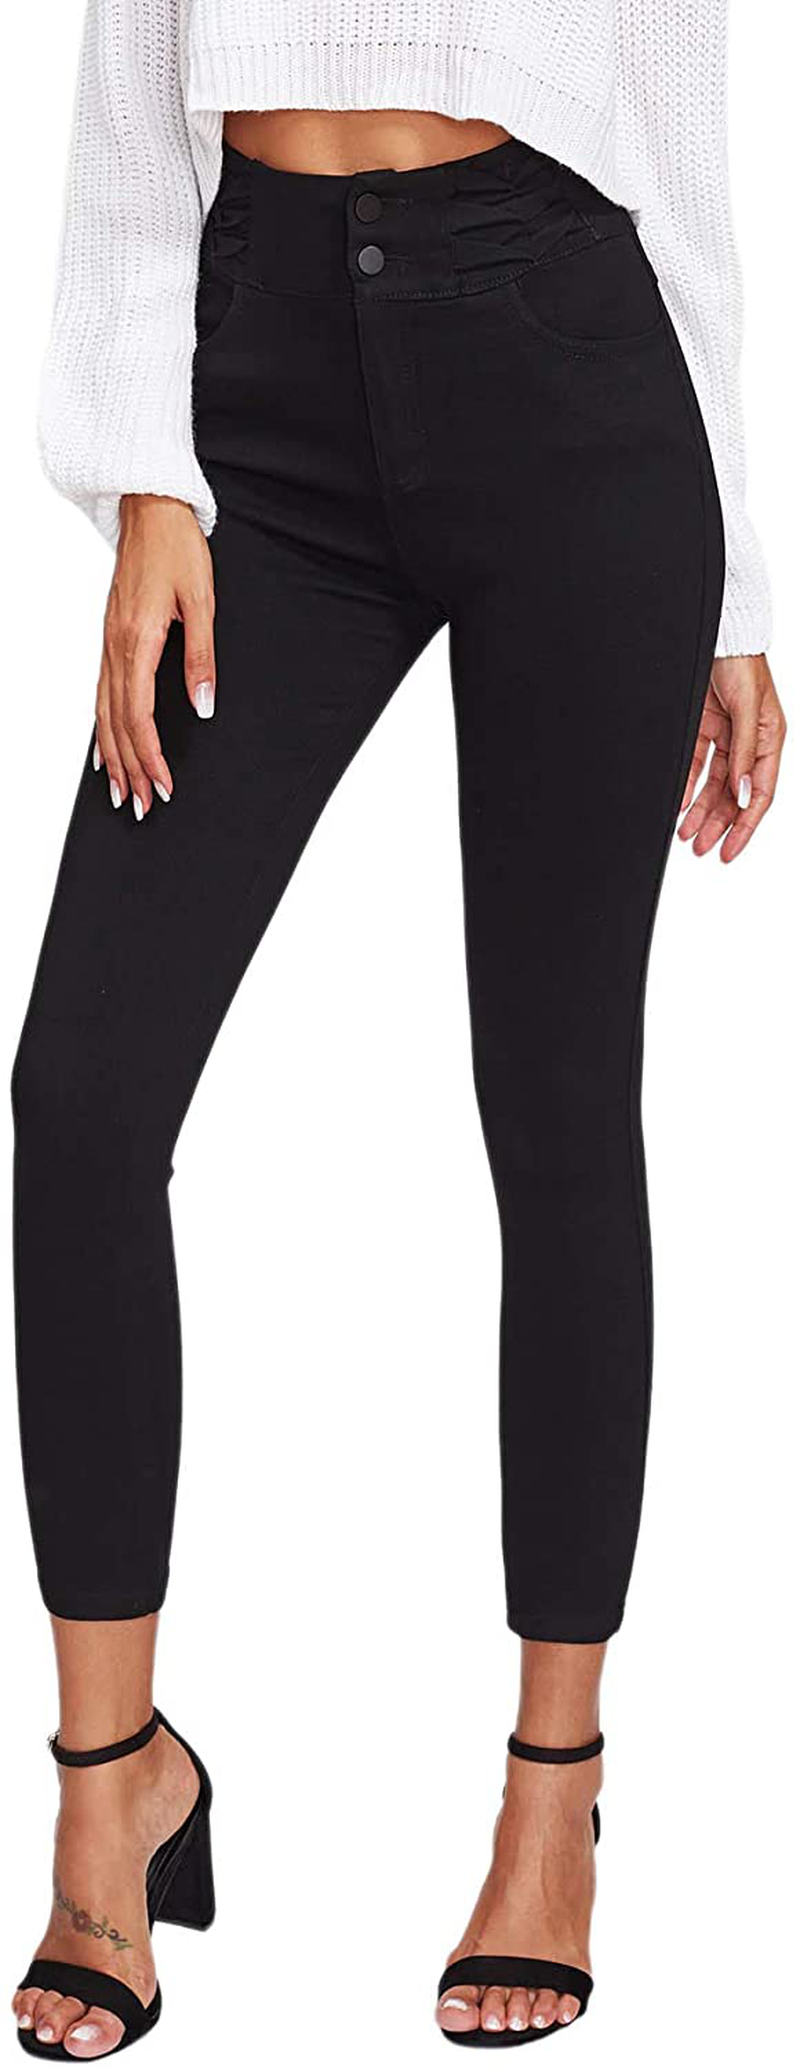 SweatyRocks Women's Basic Leggings Stretchy Slim Elastic High Waist Work Pants